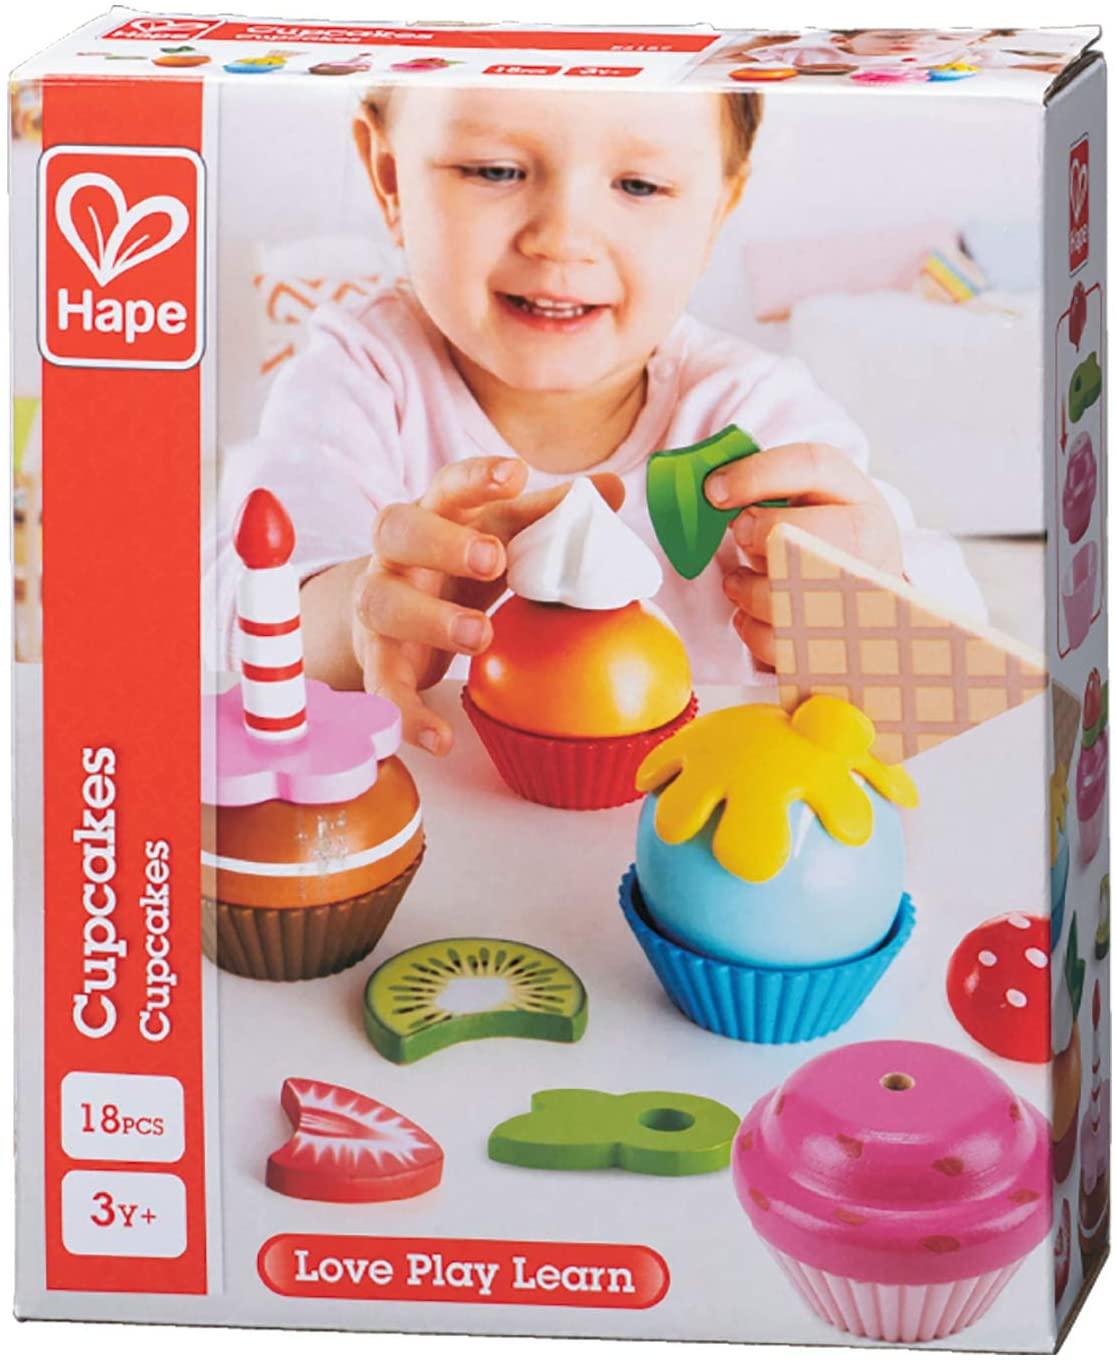 Hape cupcake set in manufacturer's packaging